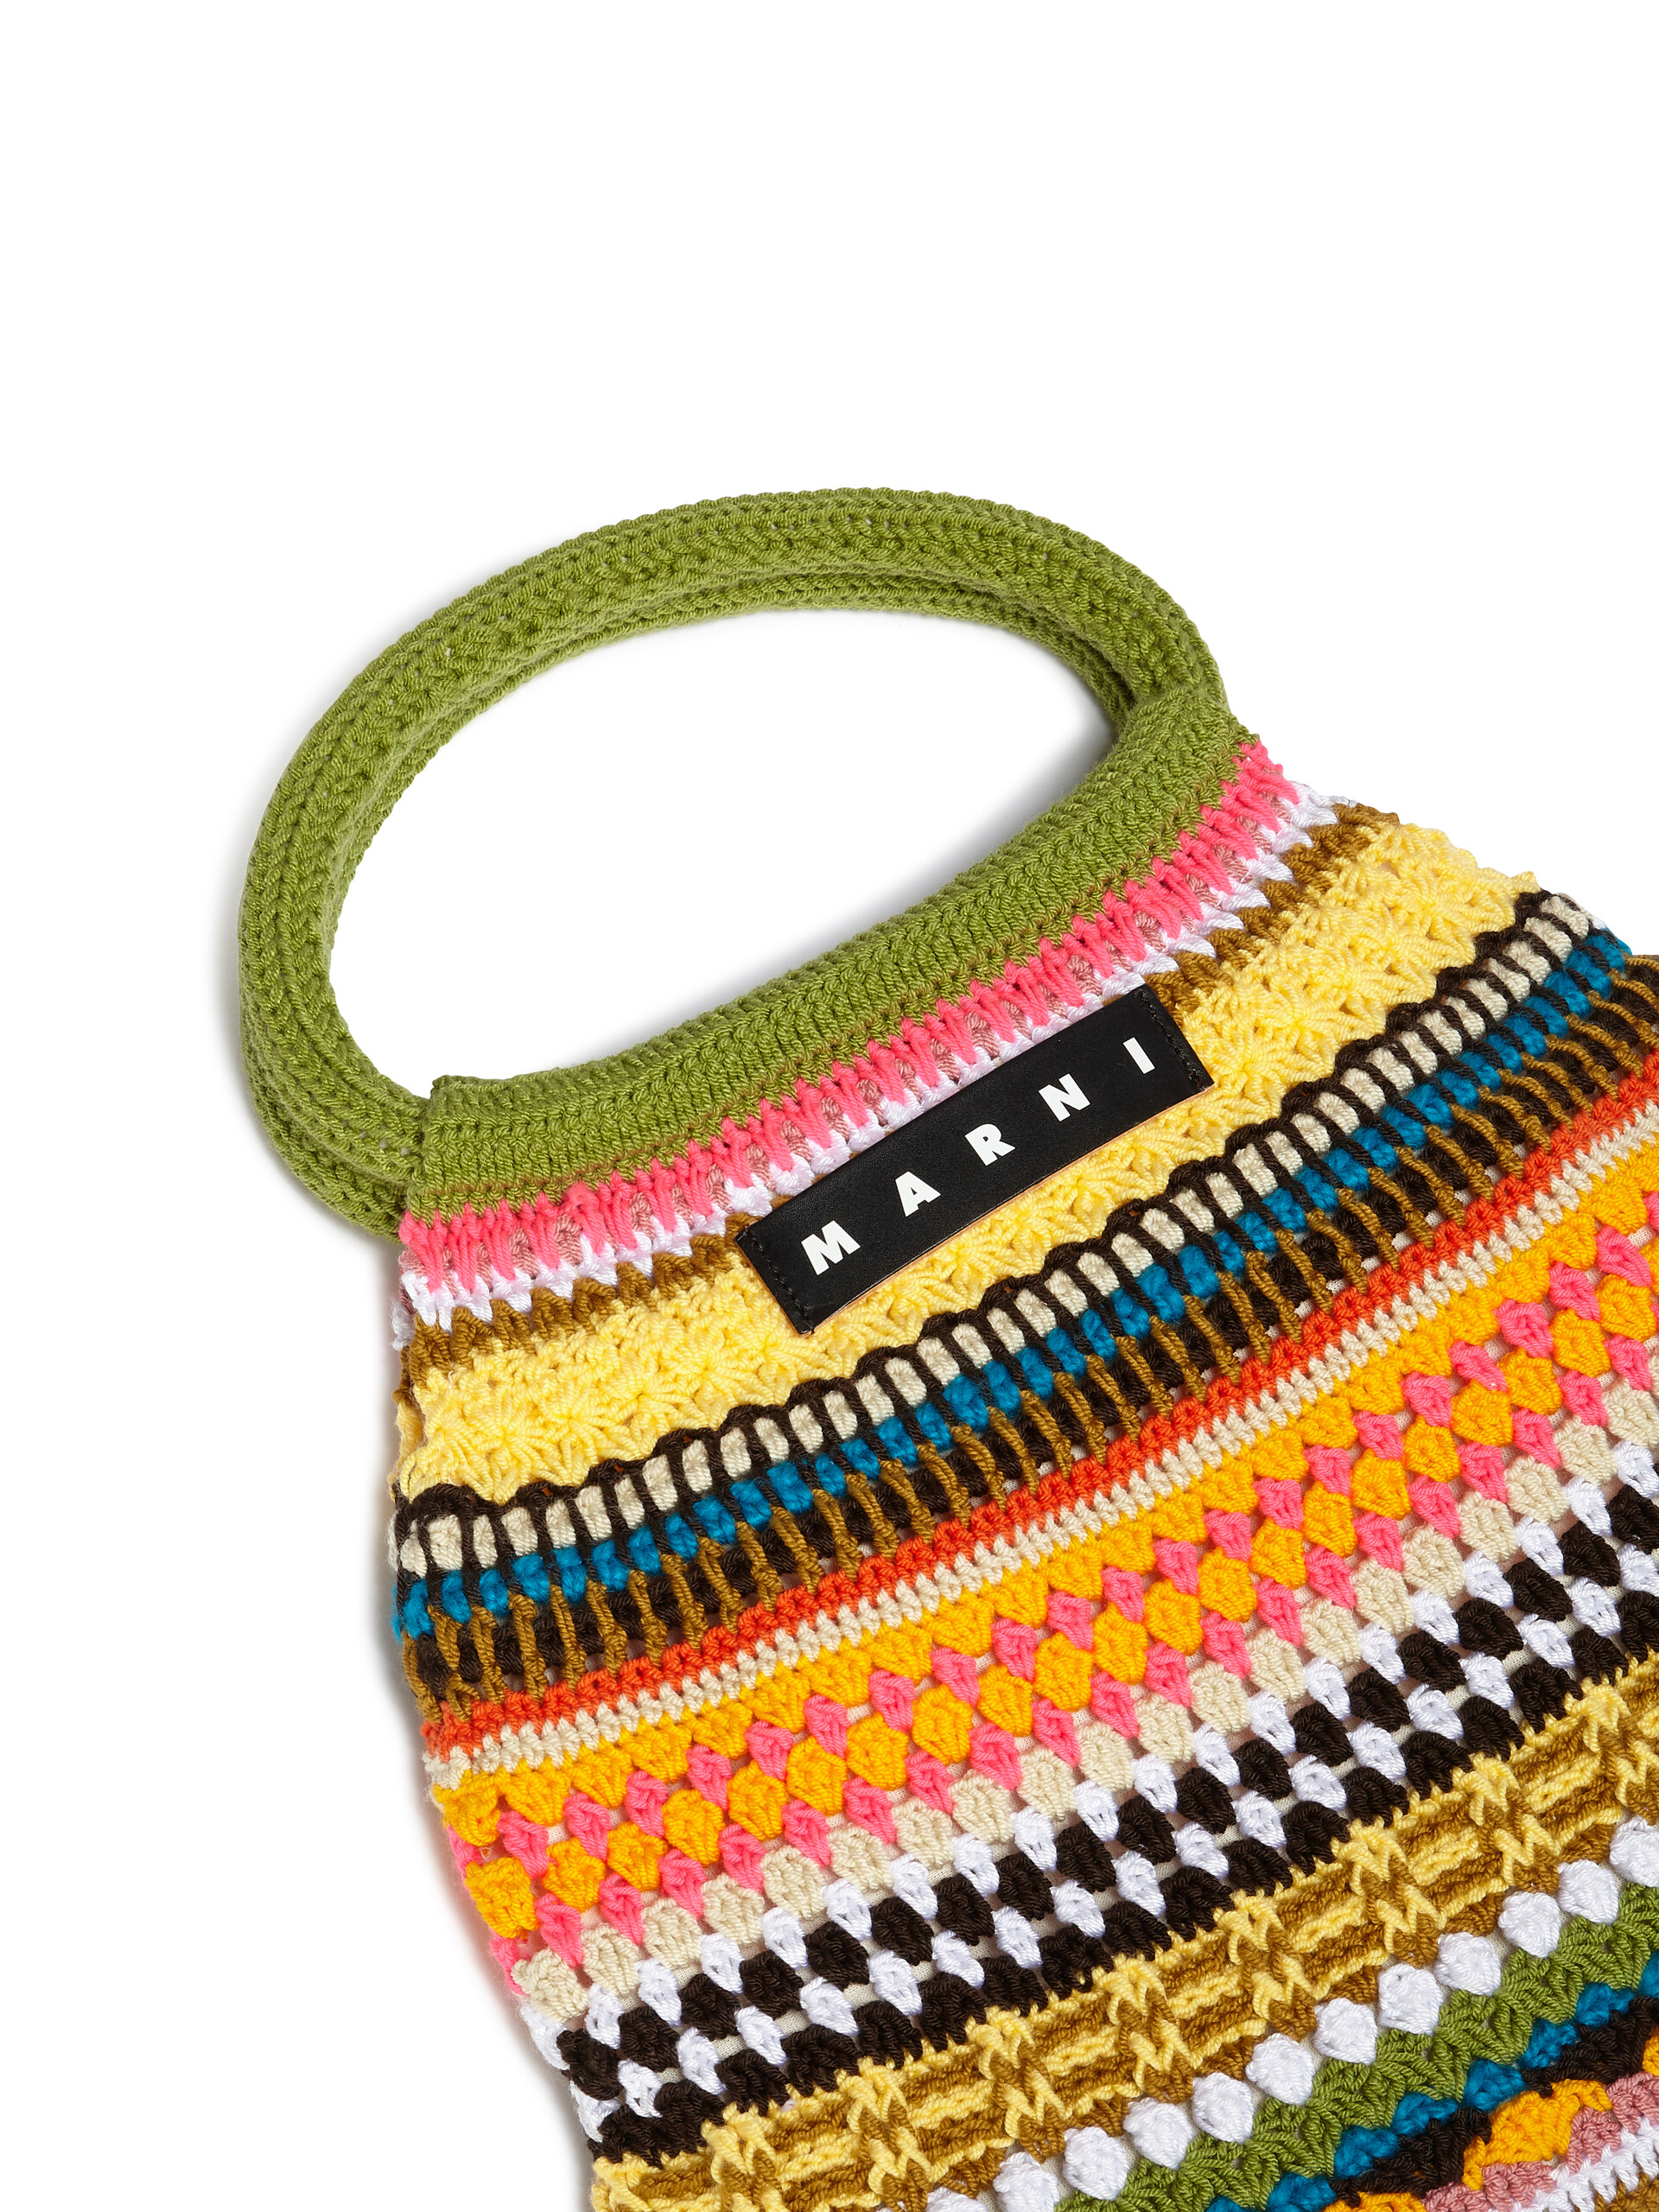 MARNI MARKET GRANNY bag in green crochet - Bags - Image 4